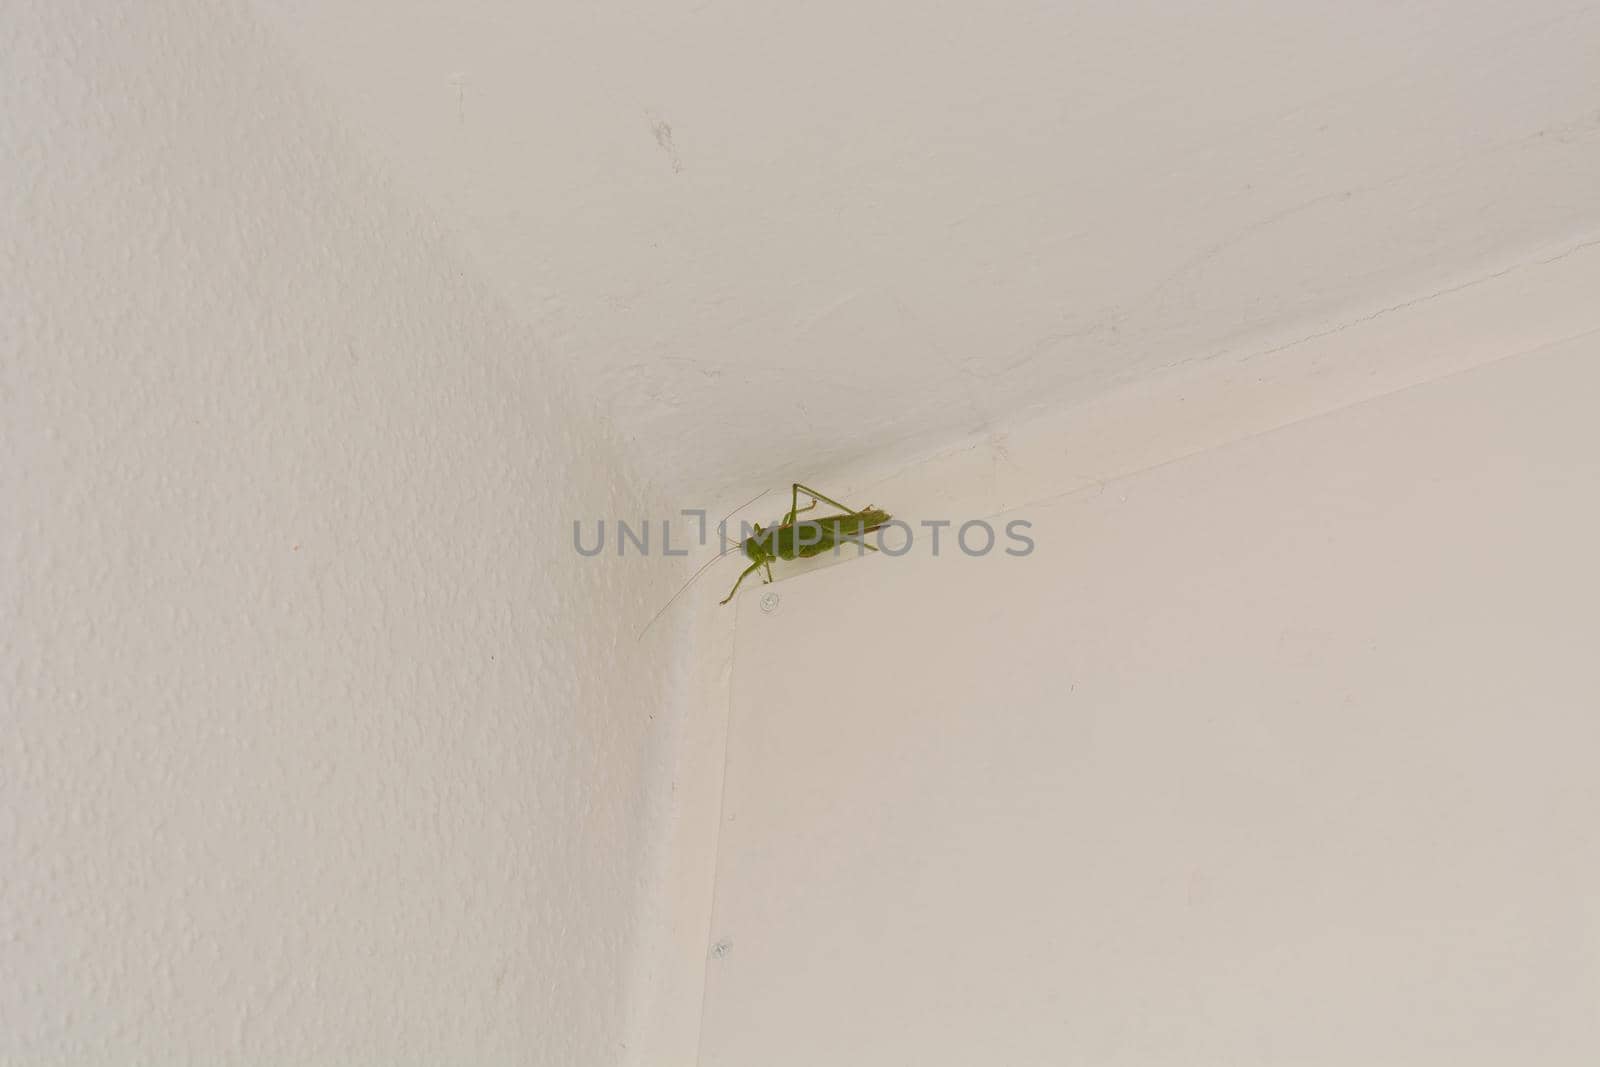 The great green bush-cricket (Tettigonia viridissima) is a large species of katydid or bush-cricket belonging to the family Tettigoniidae